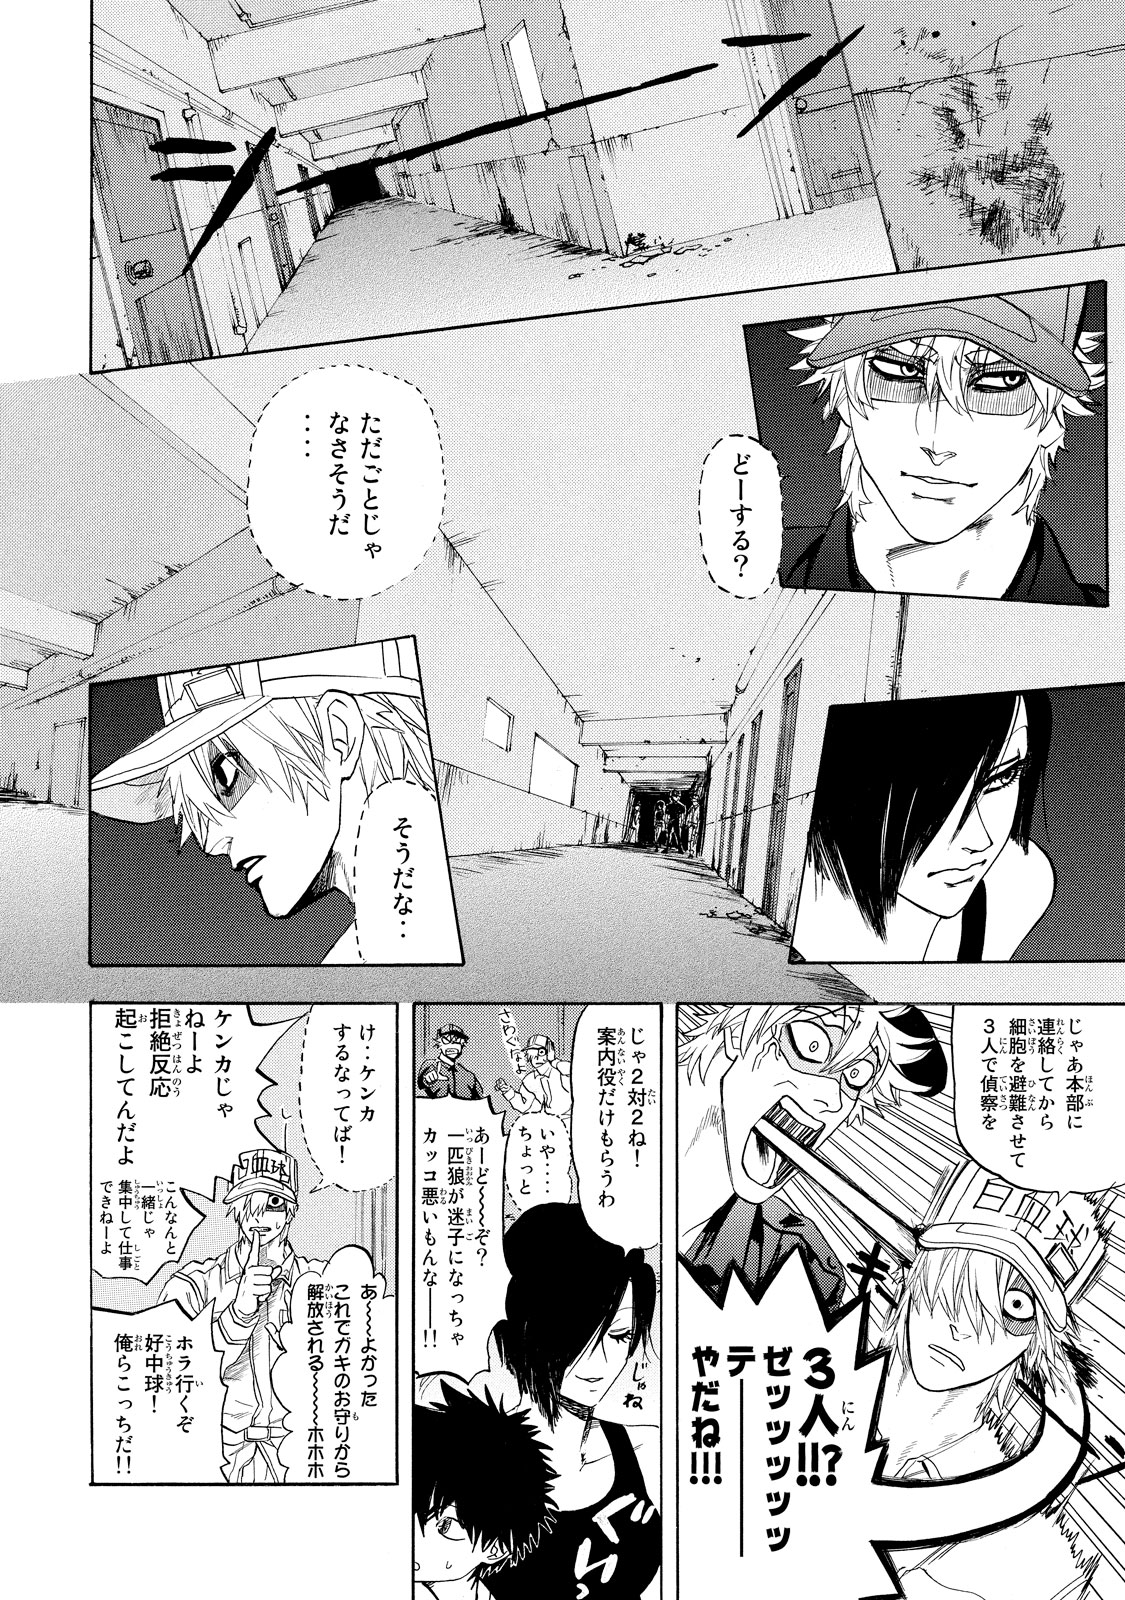 Hataraku Saibou - Chapter 8 - Page 18